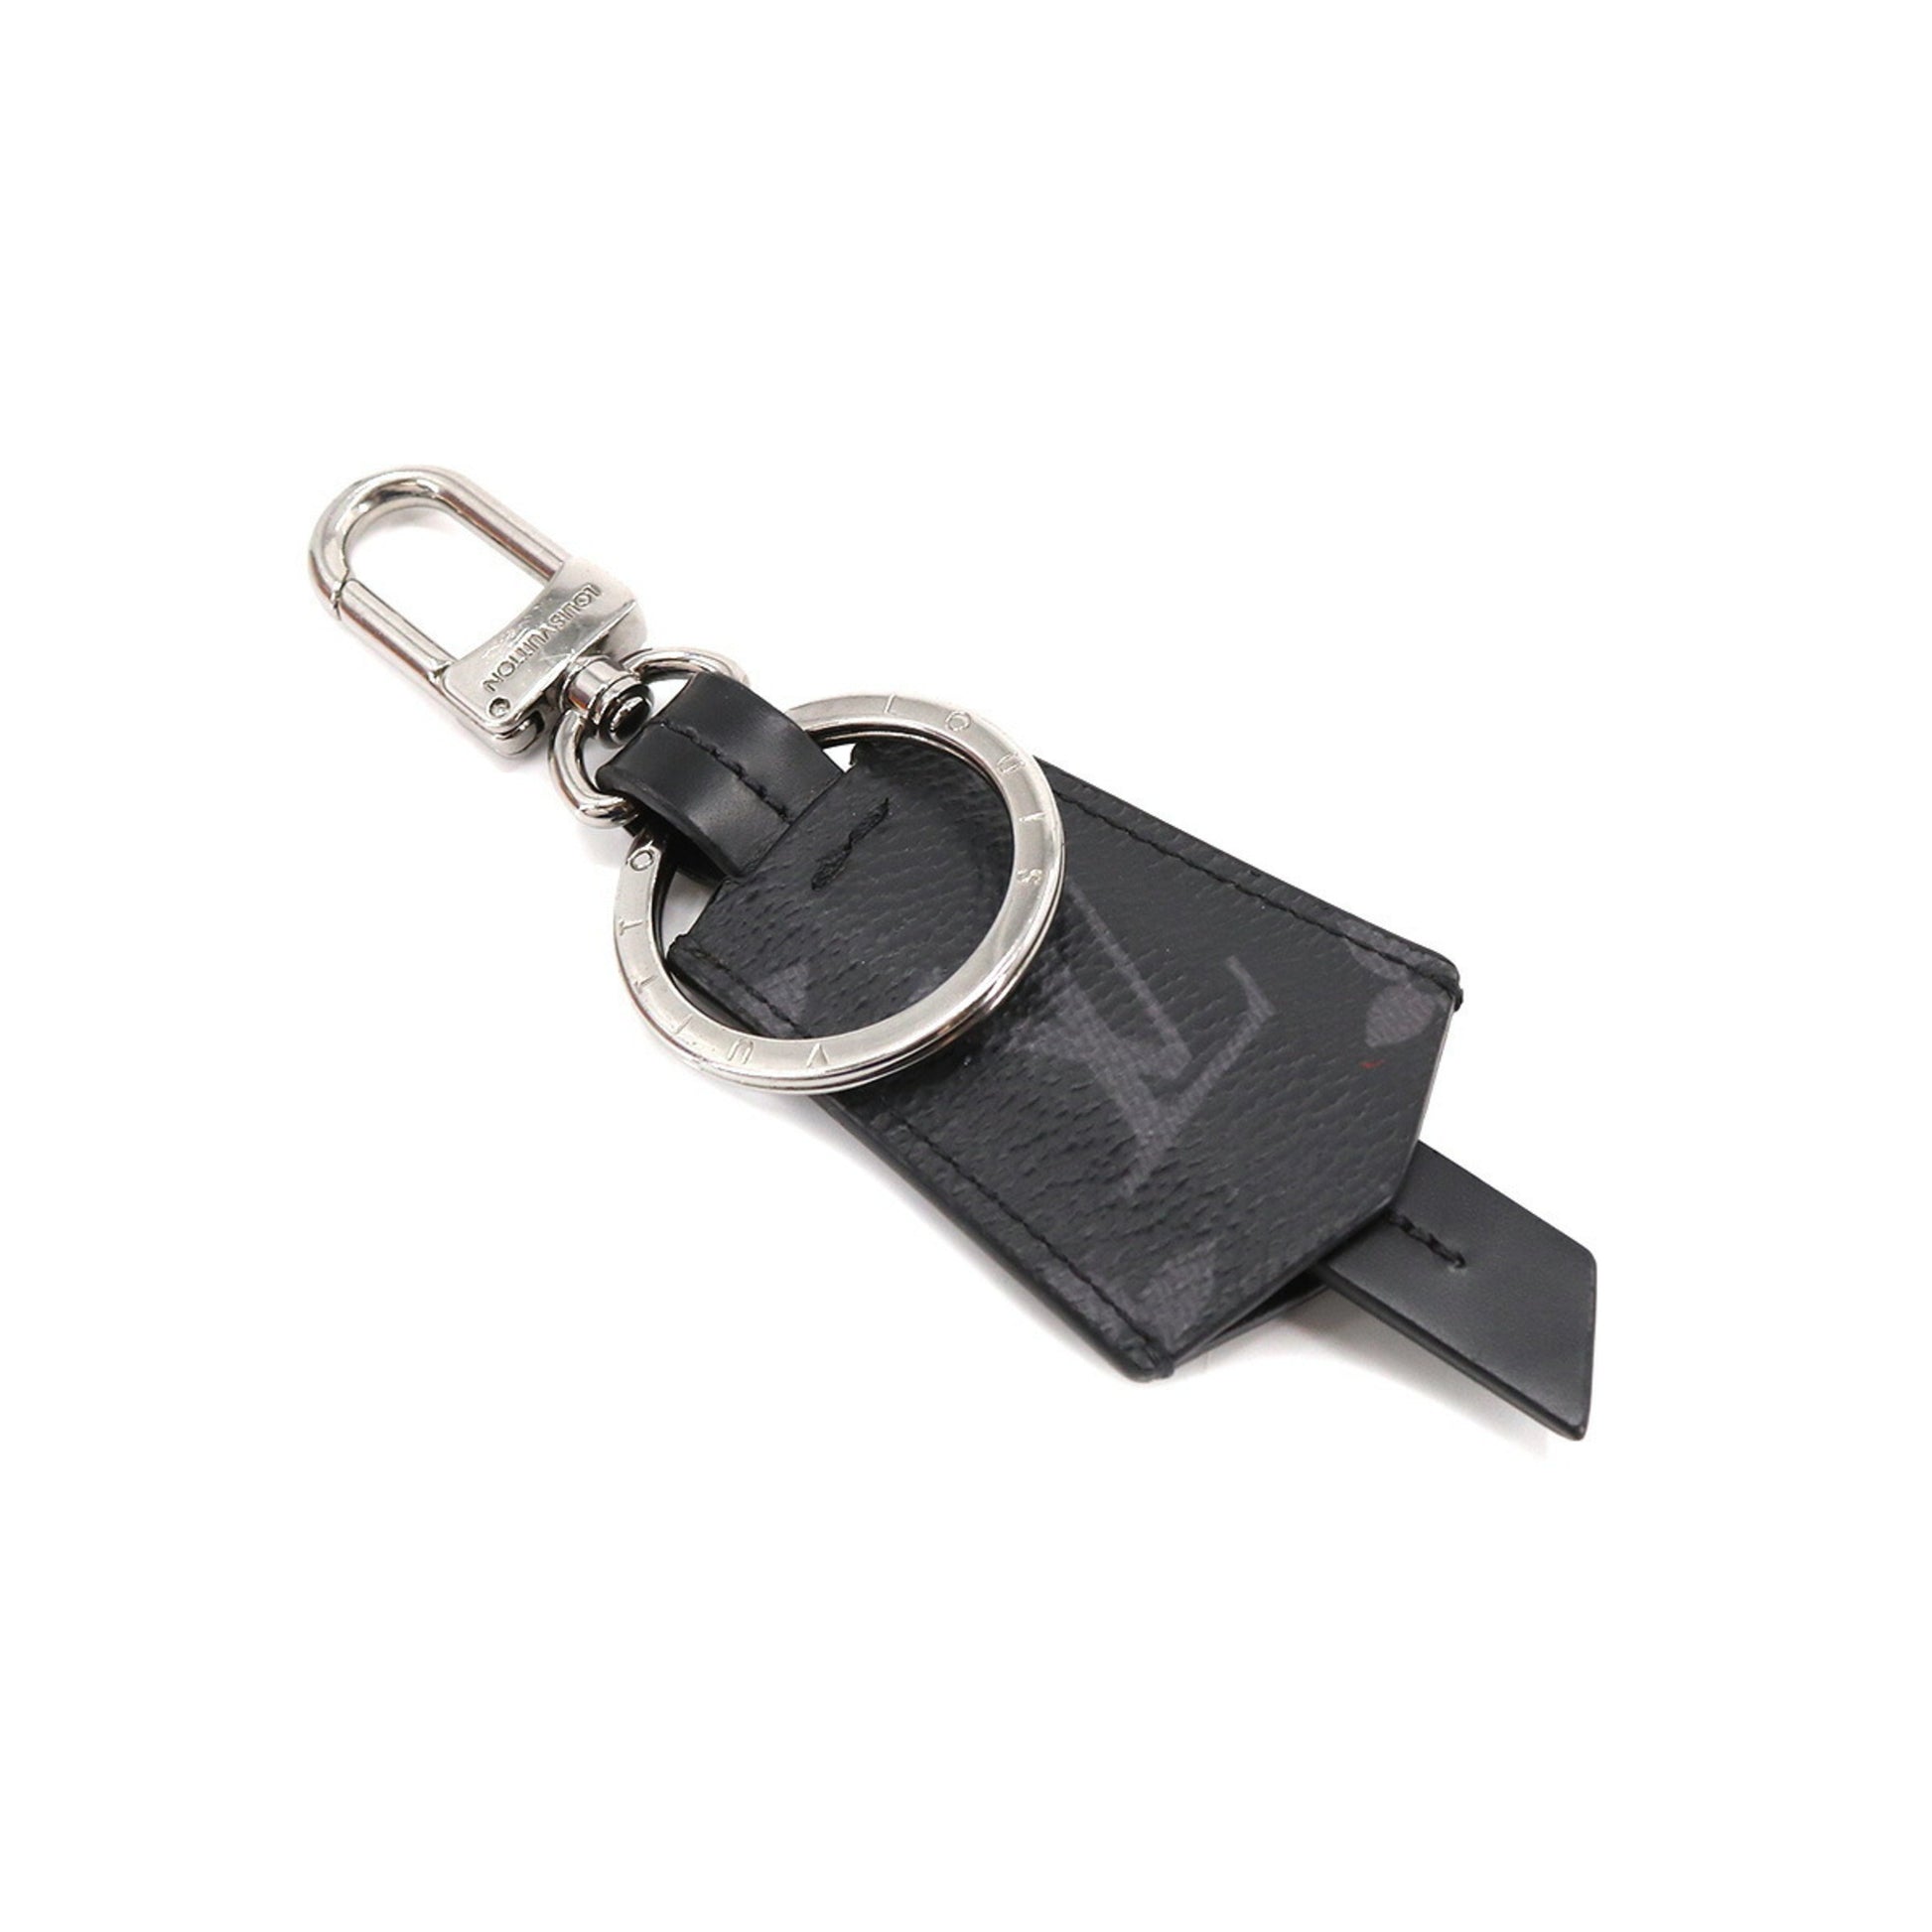 LOUIS VUITTON Monogram Eclipse Cloche Cle key ring bag charm key